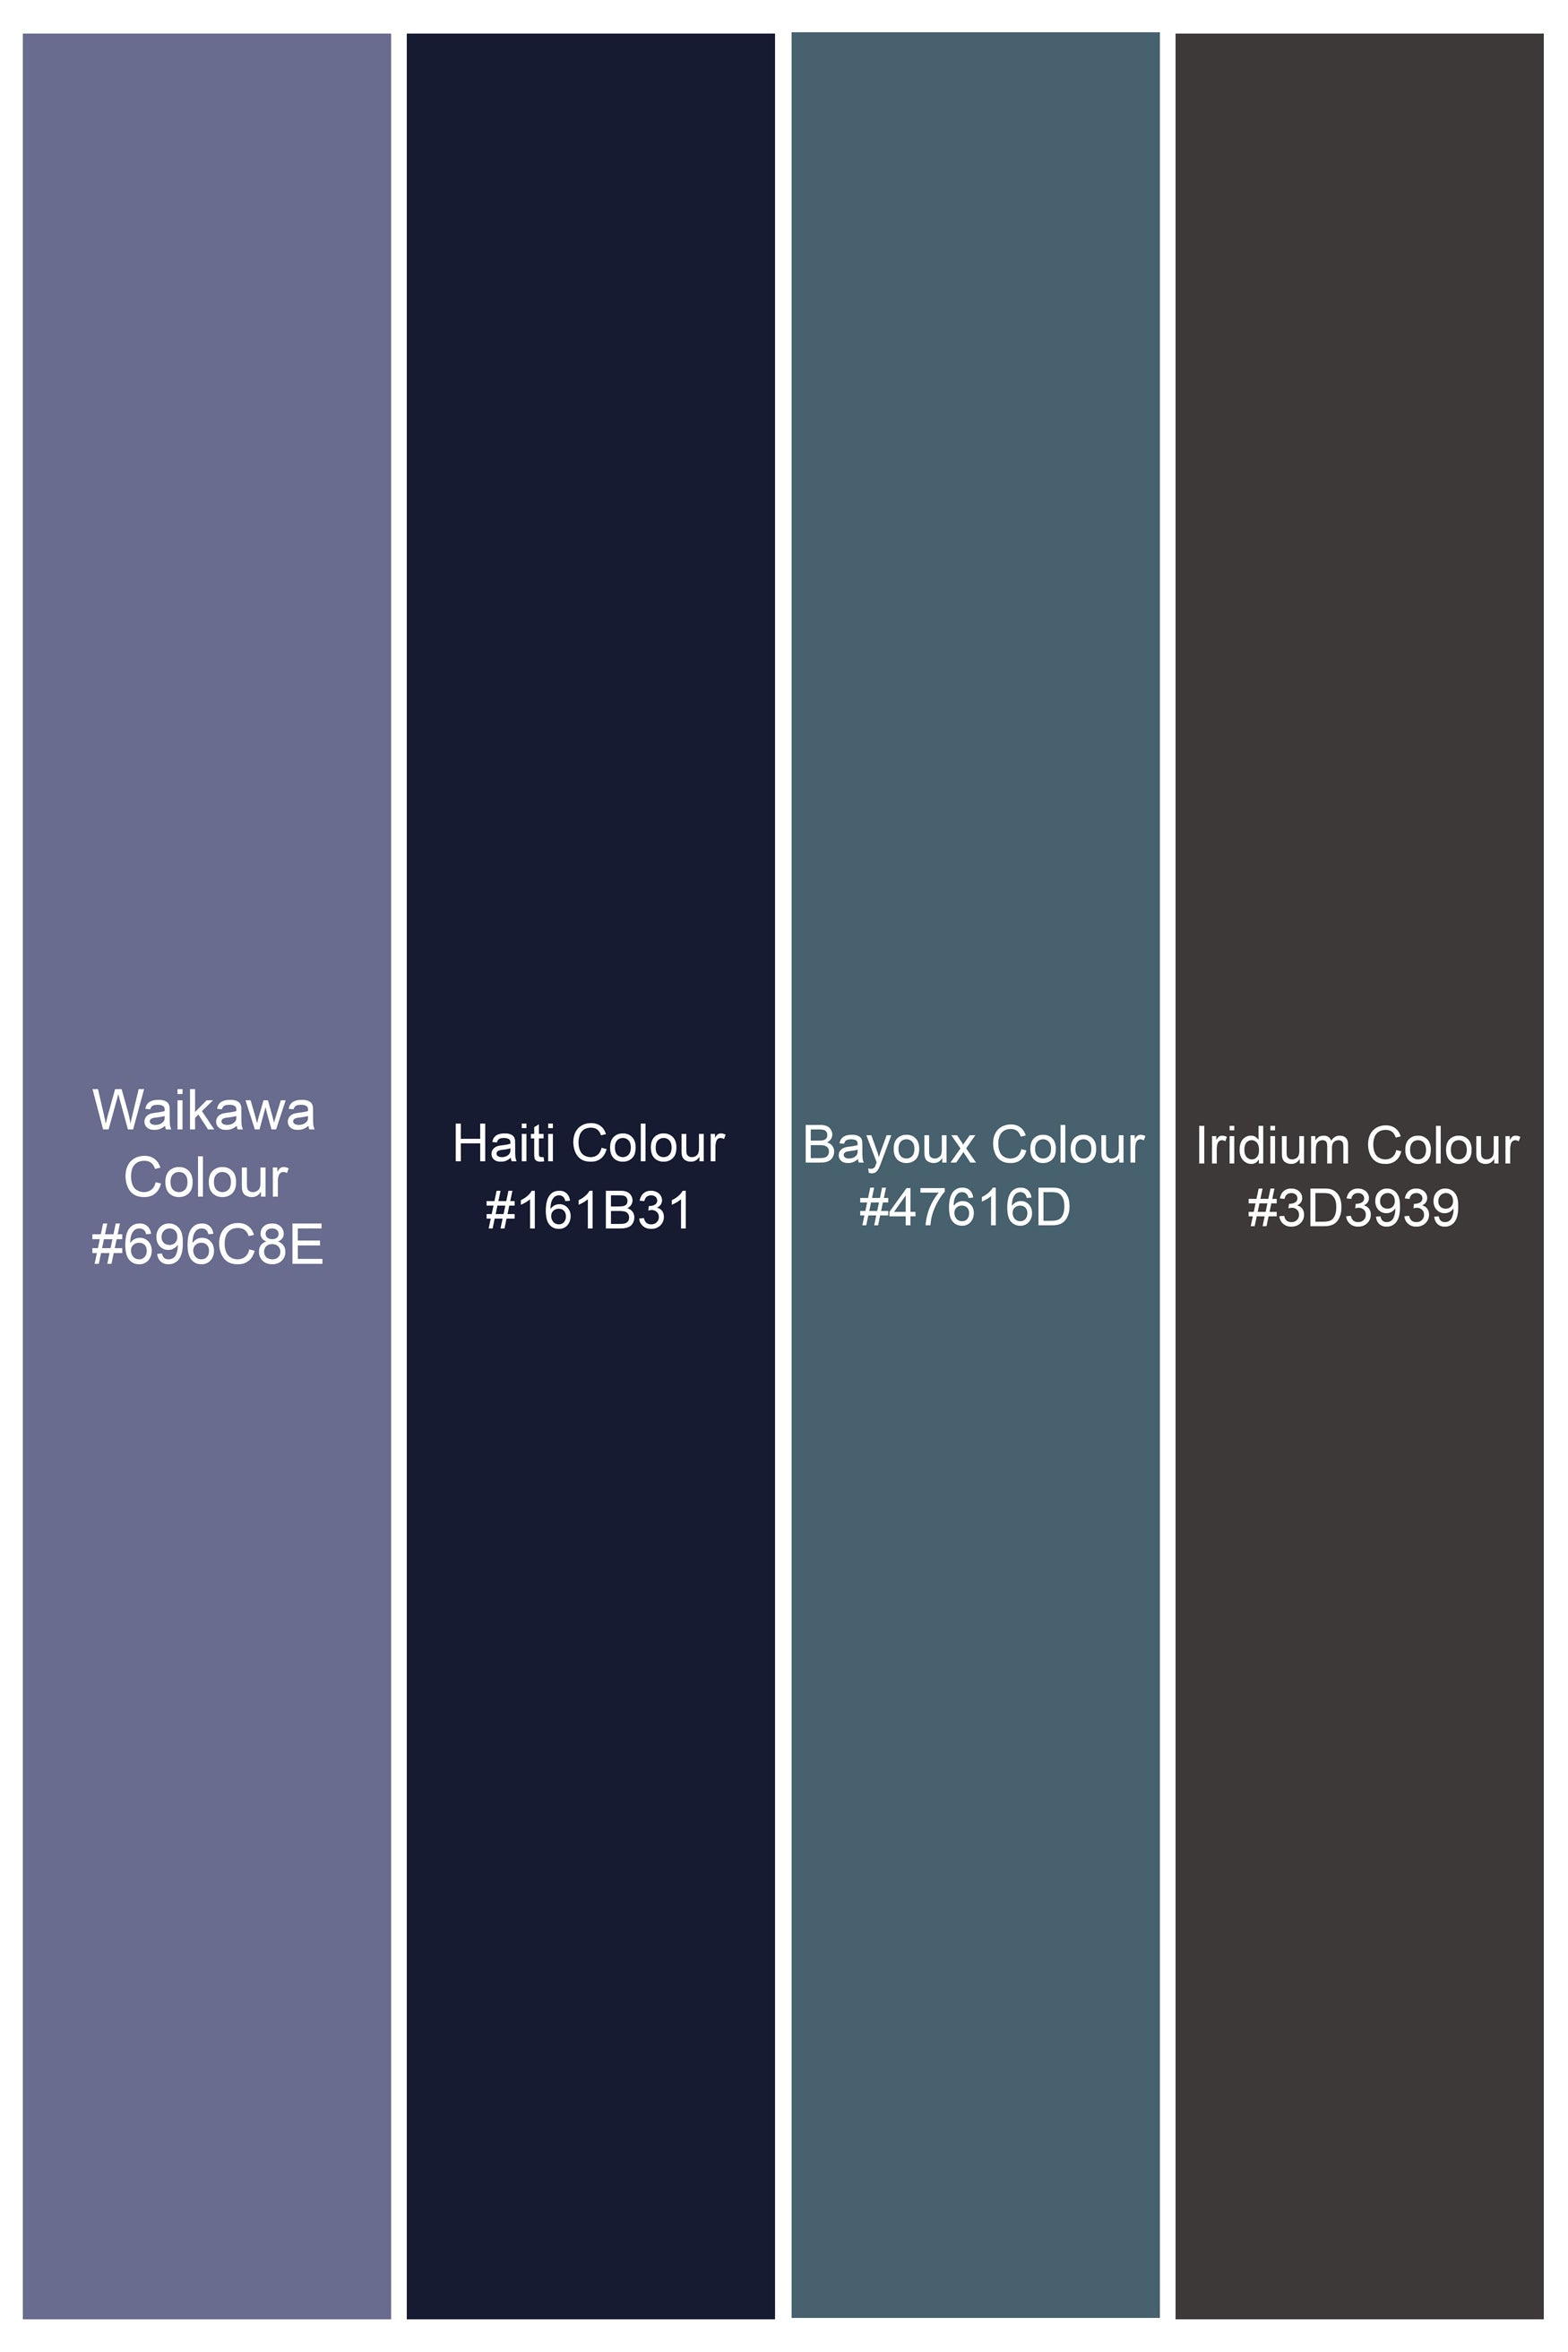 Waikawa Purple and Haiti Blue Multicolour Camouflage Royal Oxford Shirt